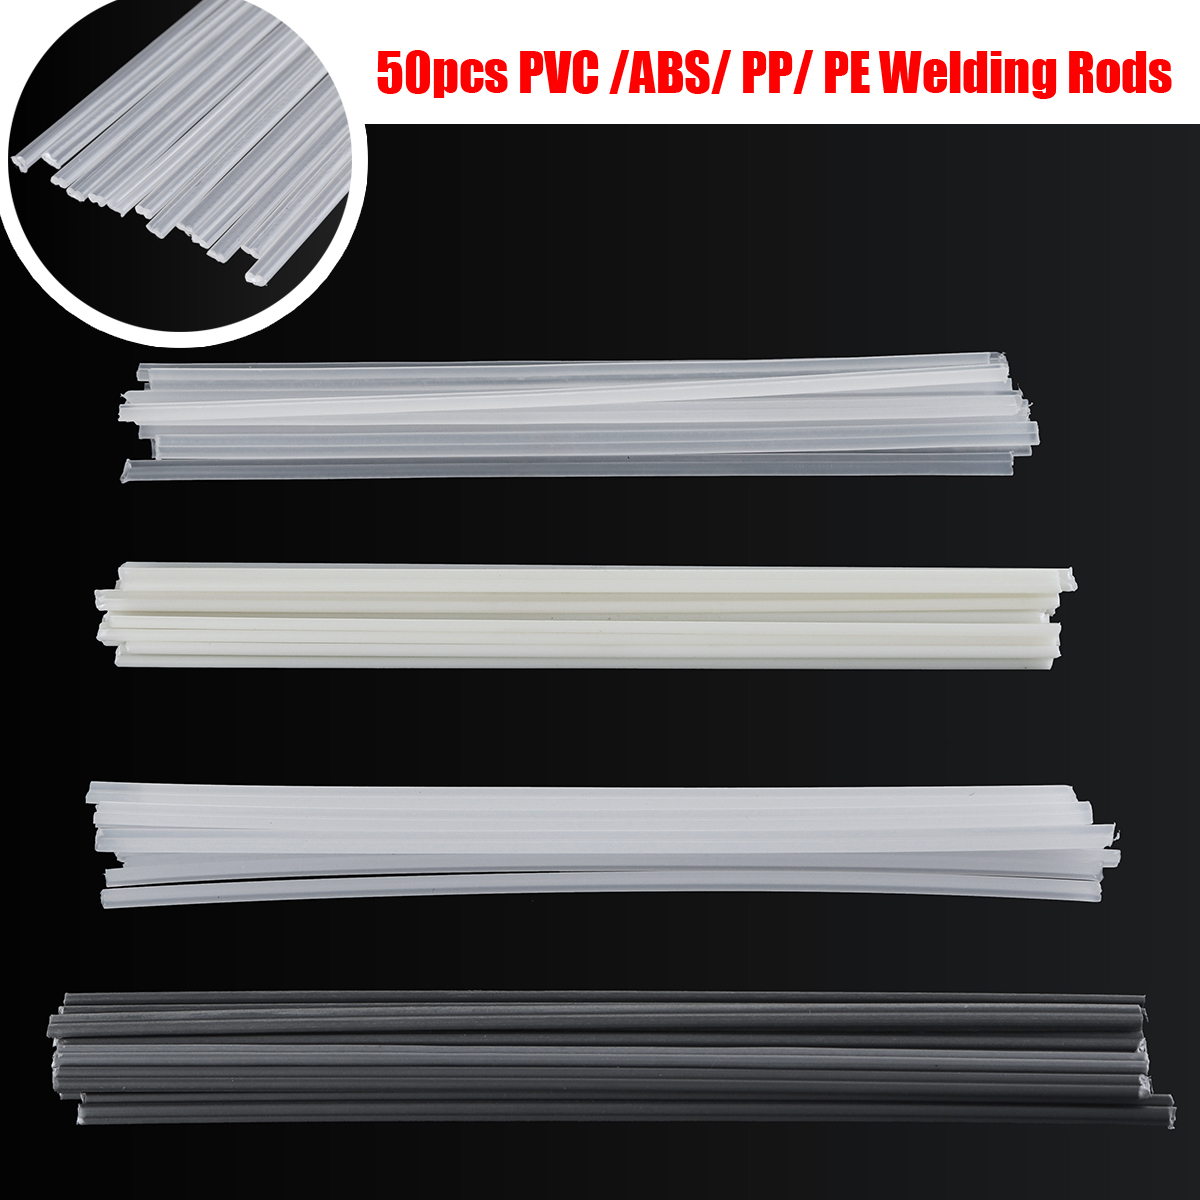 50pcs-Plastic-Welding-Rods-ABSPPPVCPE-Welding-Sticks-1366151-1